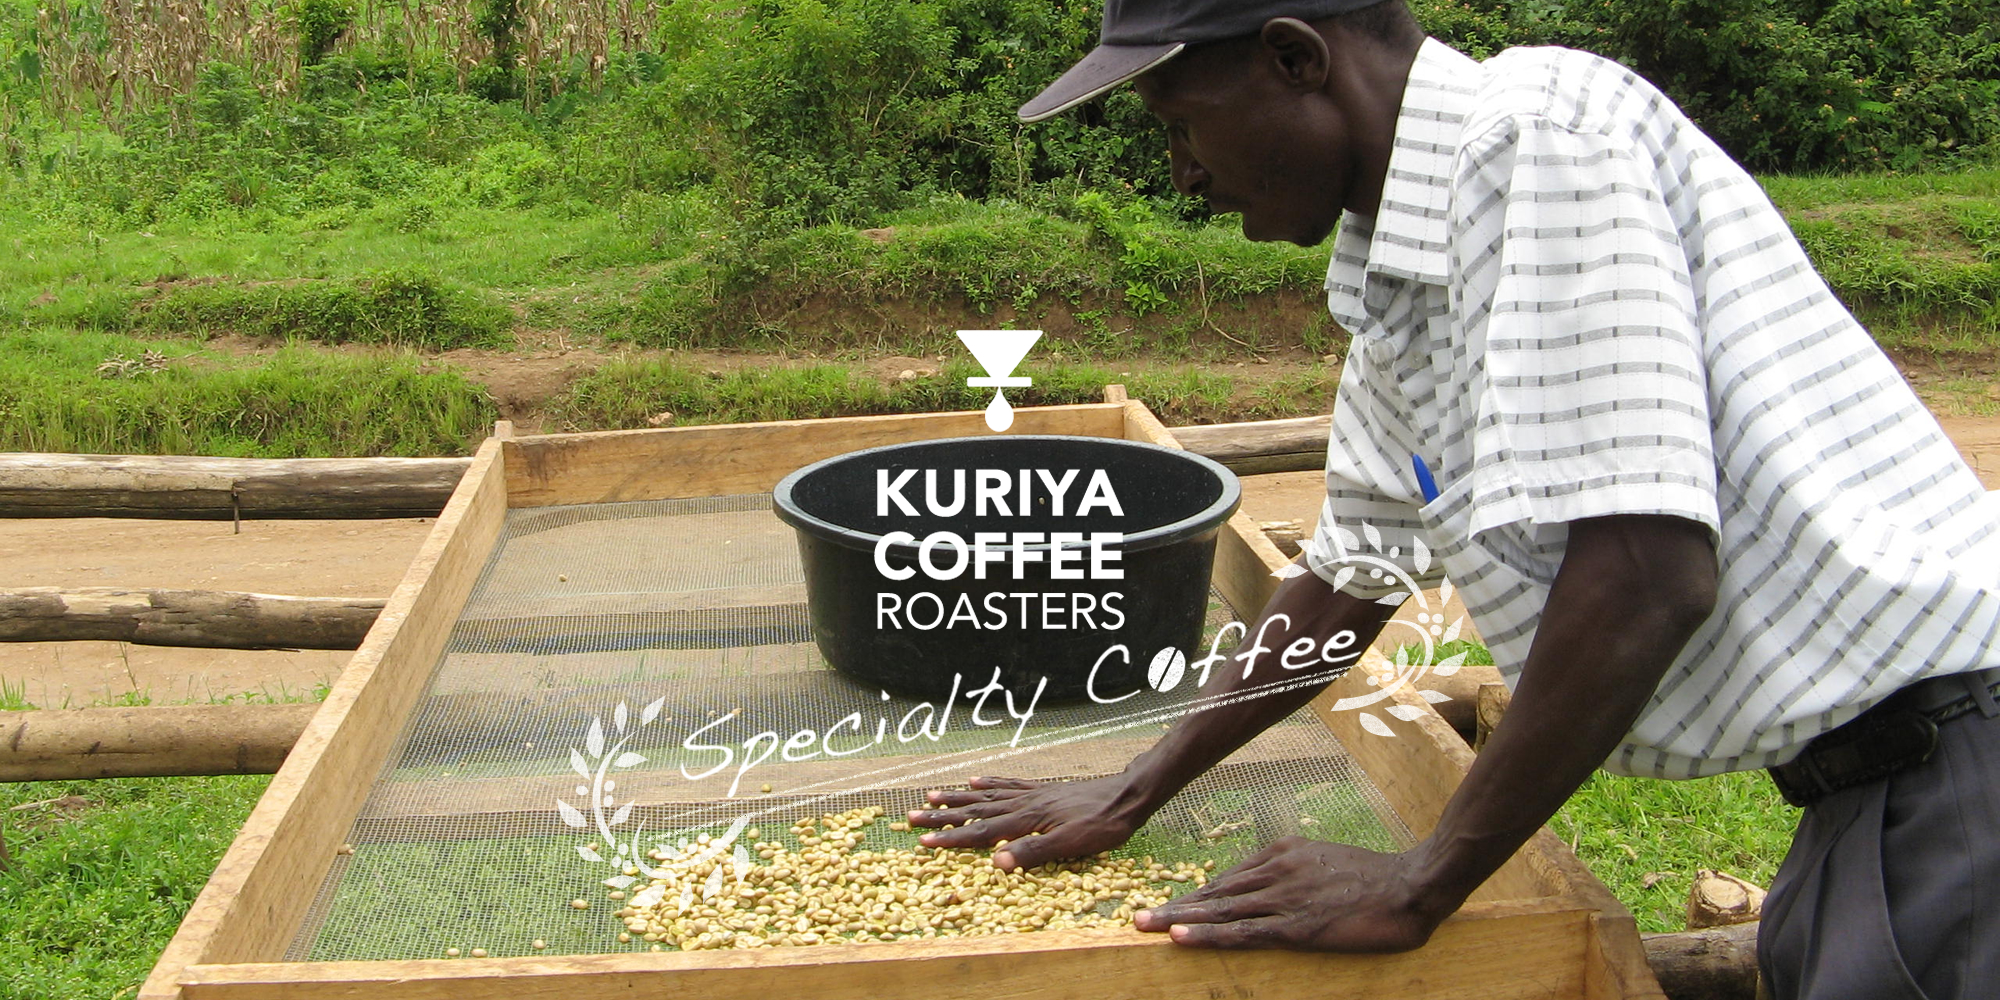 KURIYA COFFEE ROASTERS